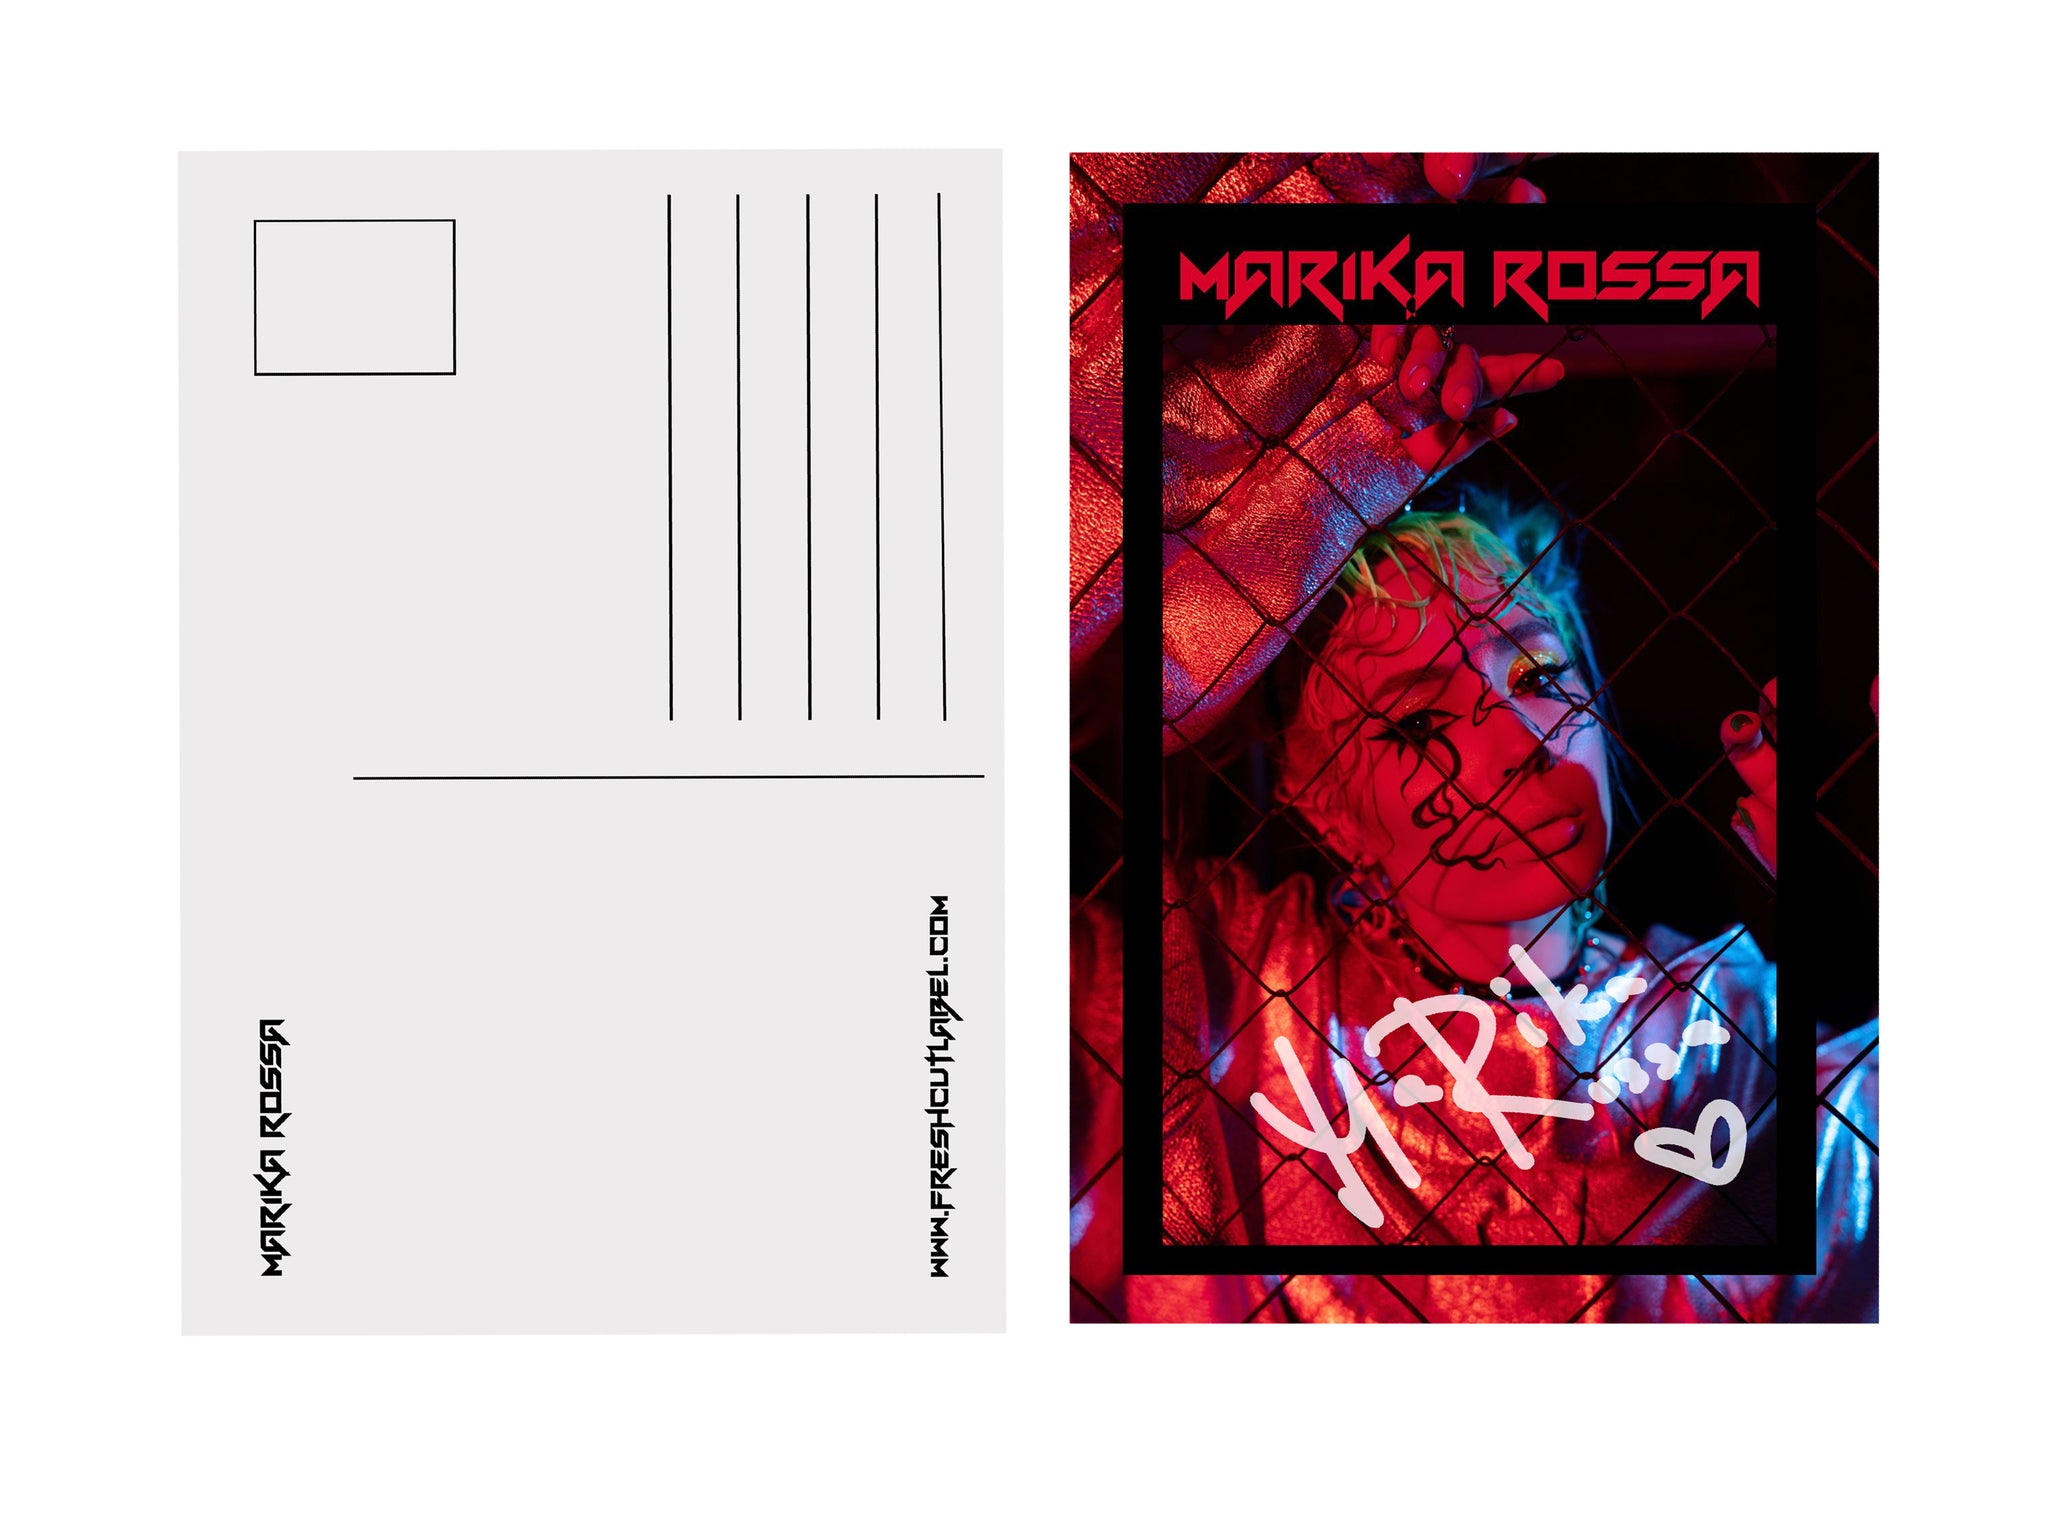 Marika Rossa signed card.